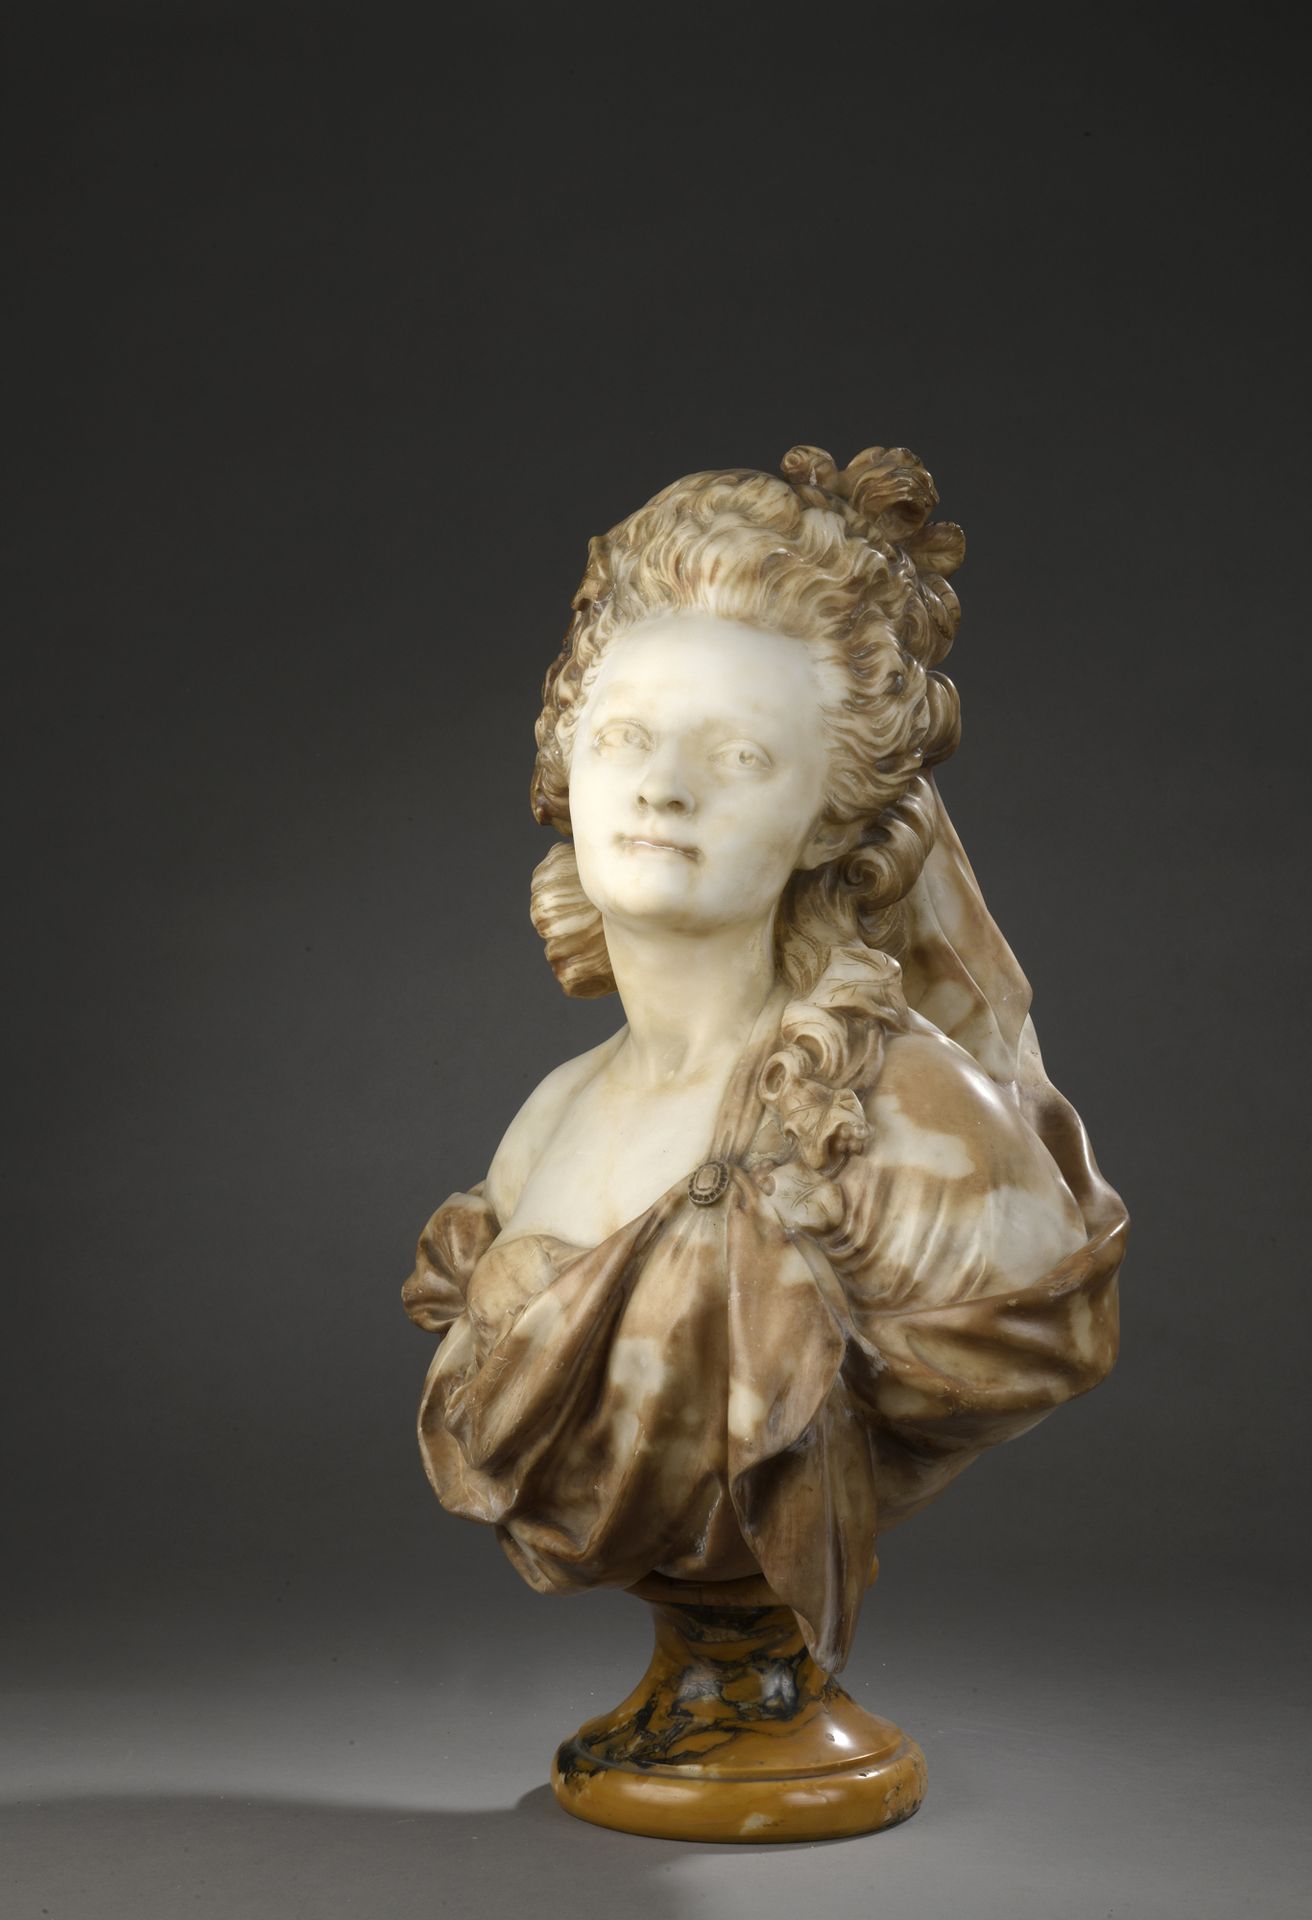 Null 一个 18 世纪优雅女性的大理石雕像
圆形模制基座。
H.56 厘米